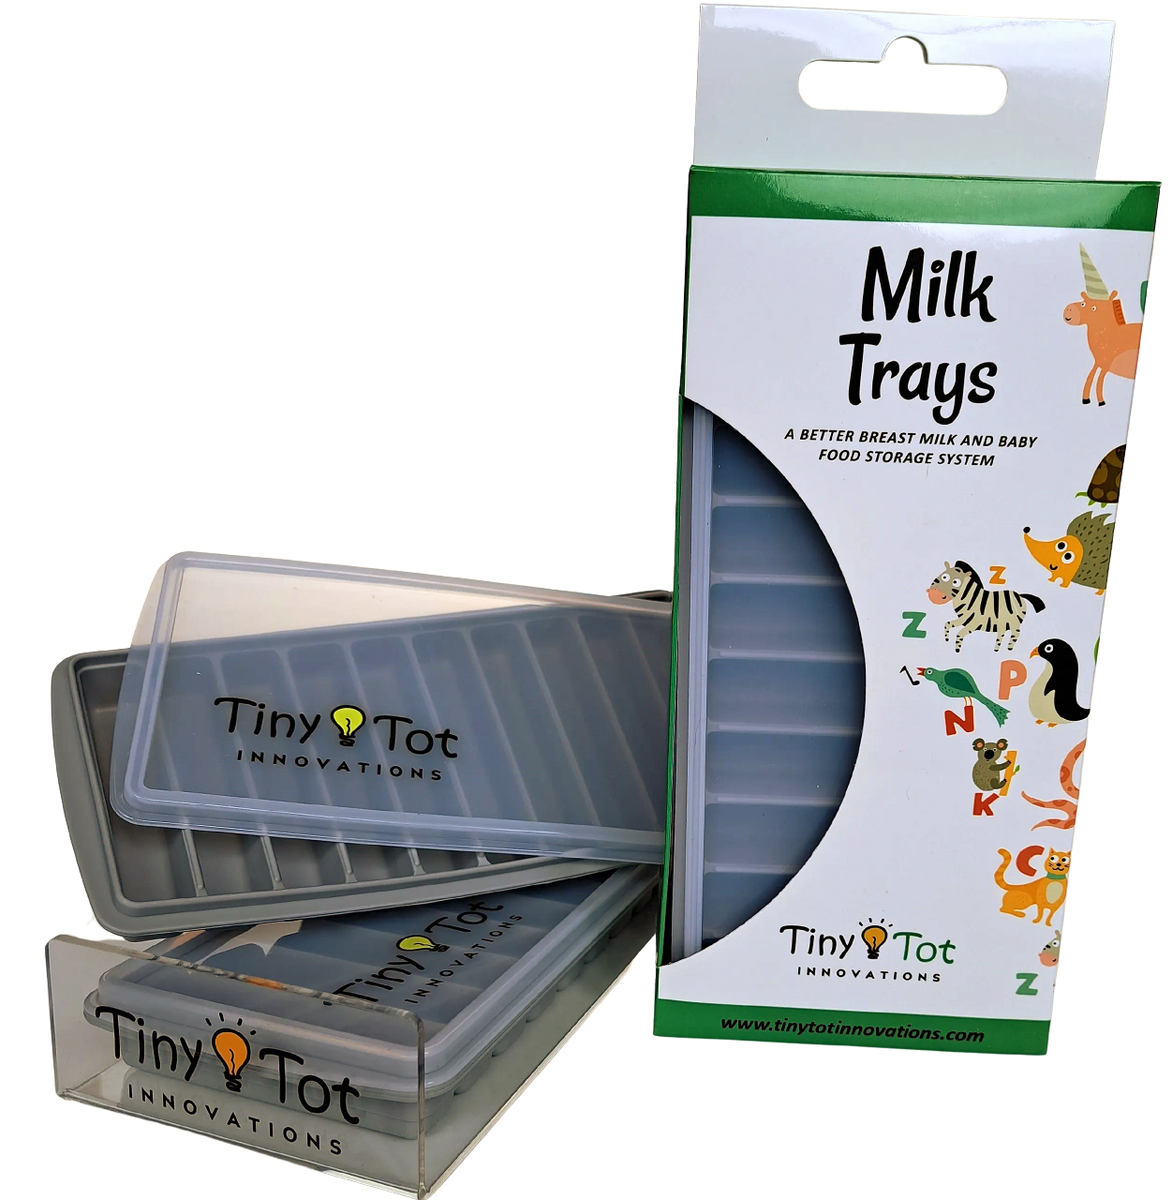 Milkies, Milk Trays, 2 Reusable Trays